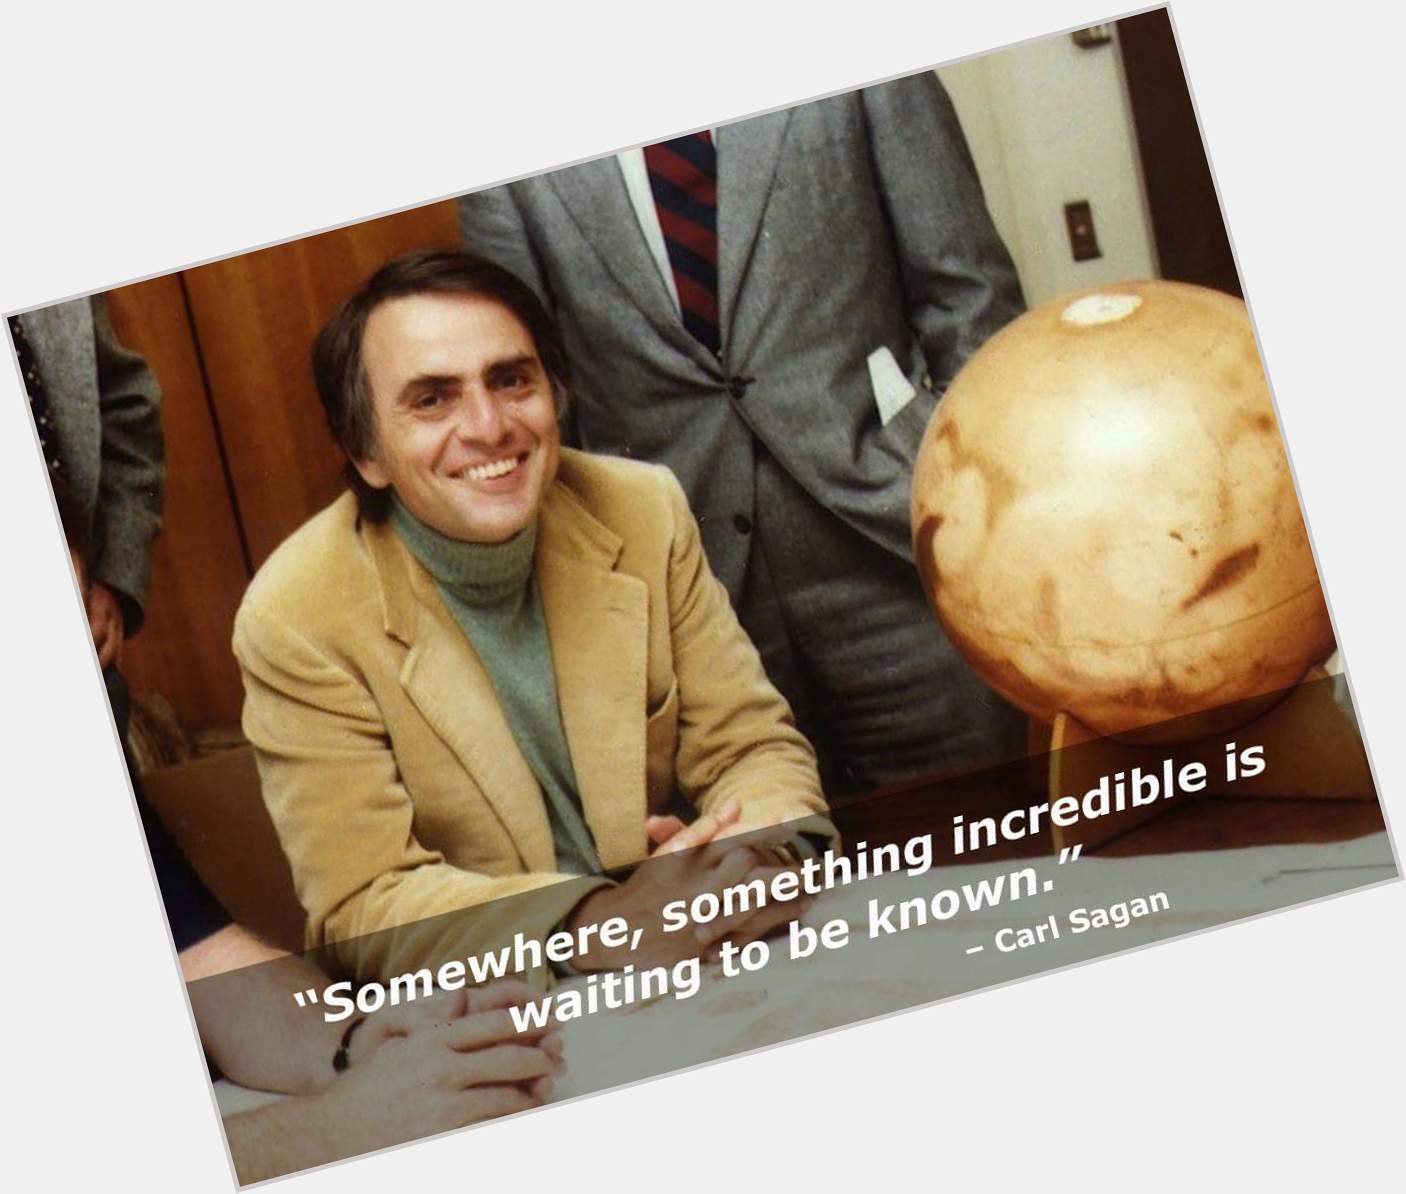 Happy birthday to Carl Sagan! 